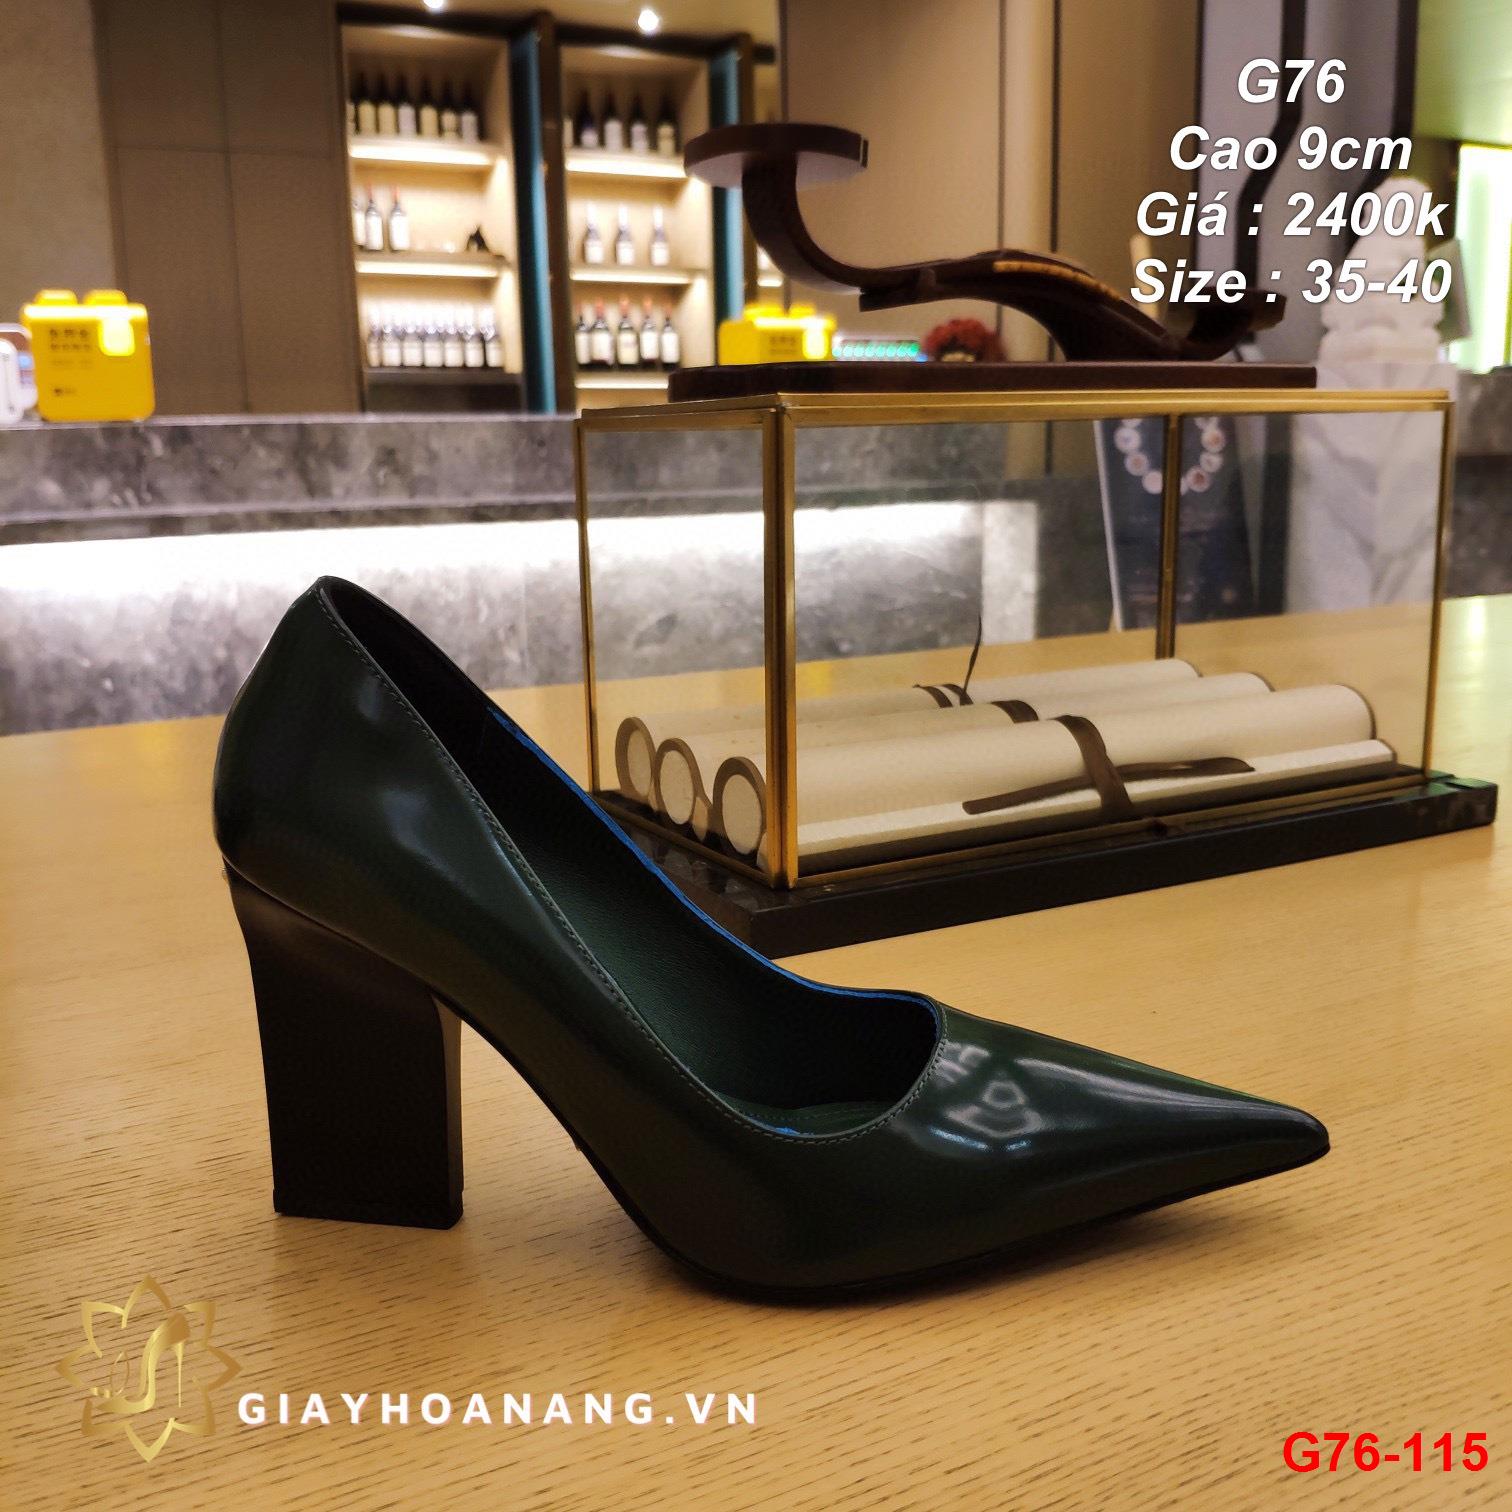 G76-115 Prada giày cao 9cm siêu cấp